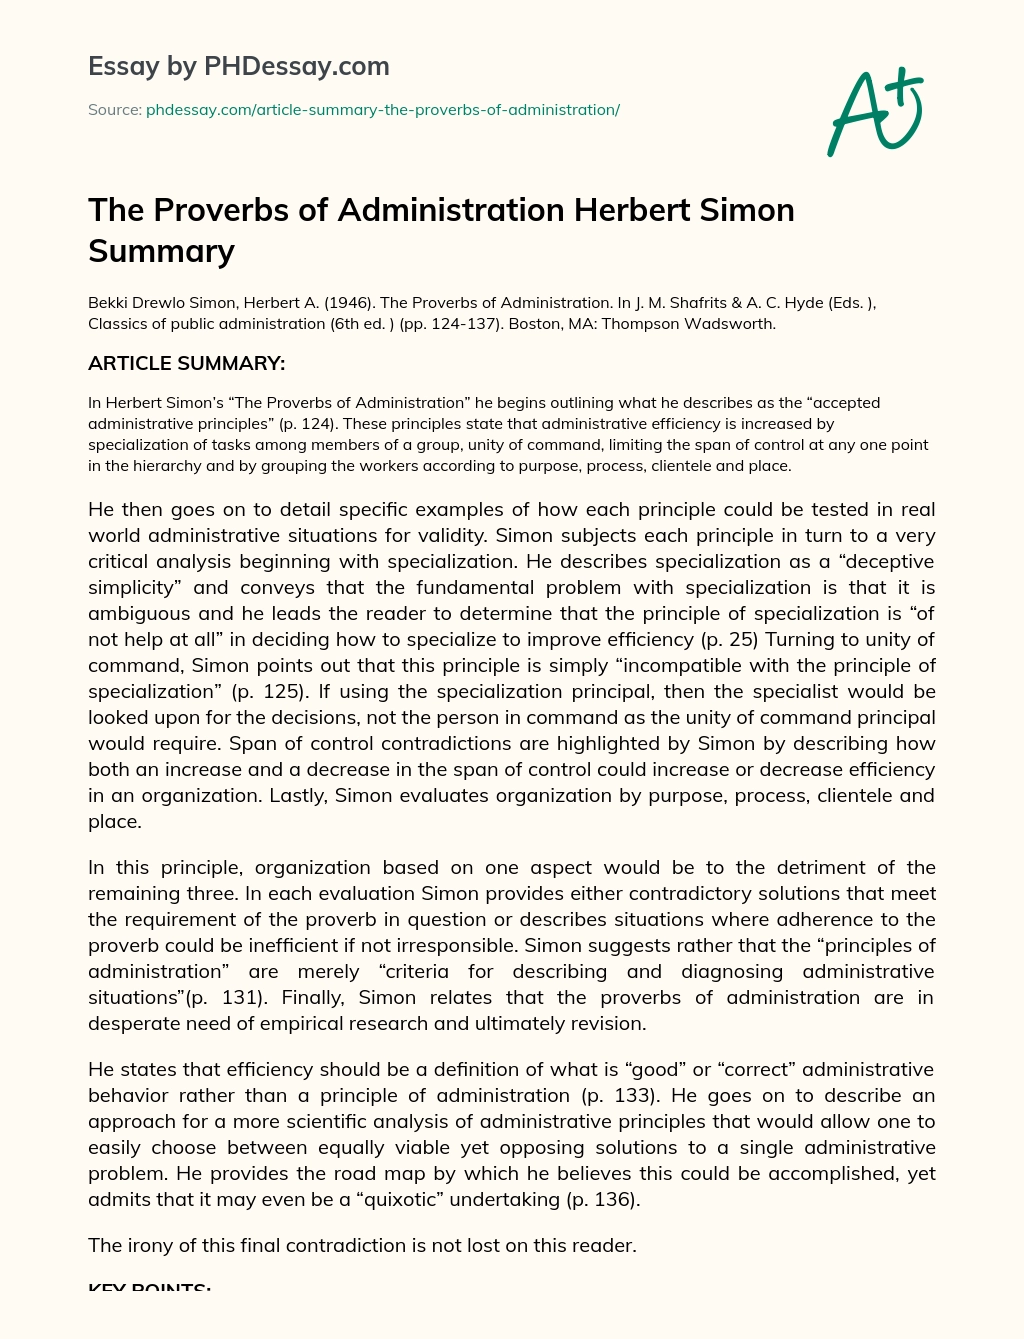 The Proverbs of Administration Herbert Simon Summary essay